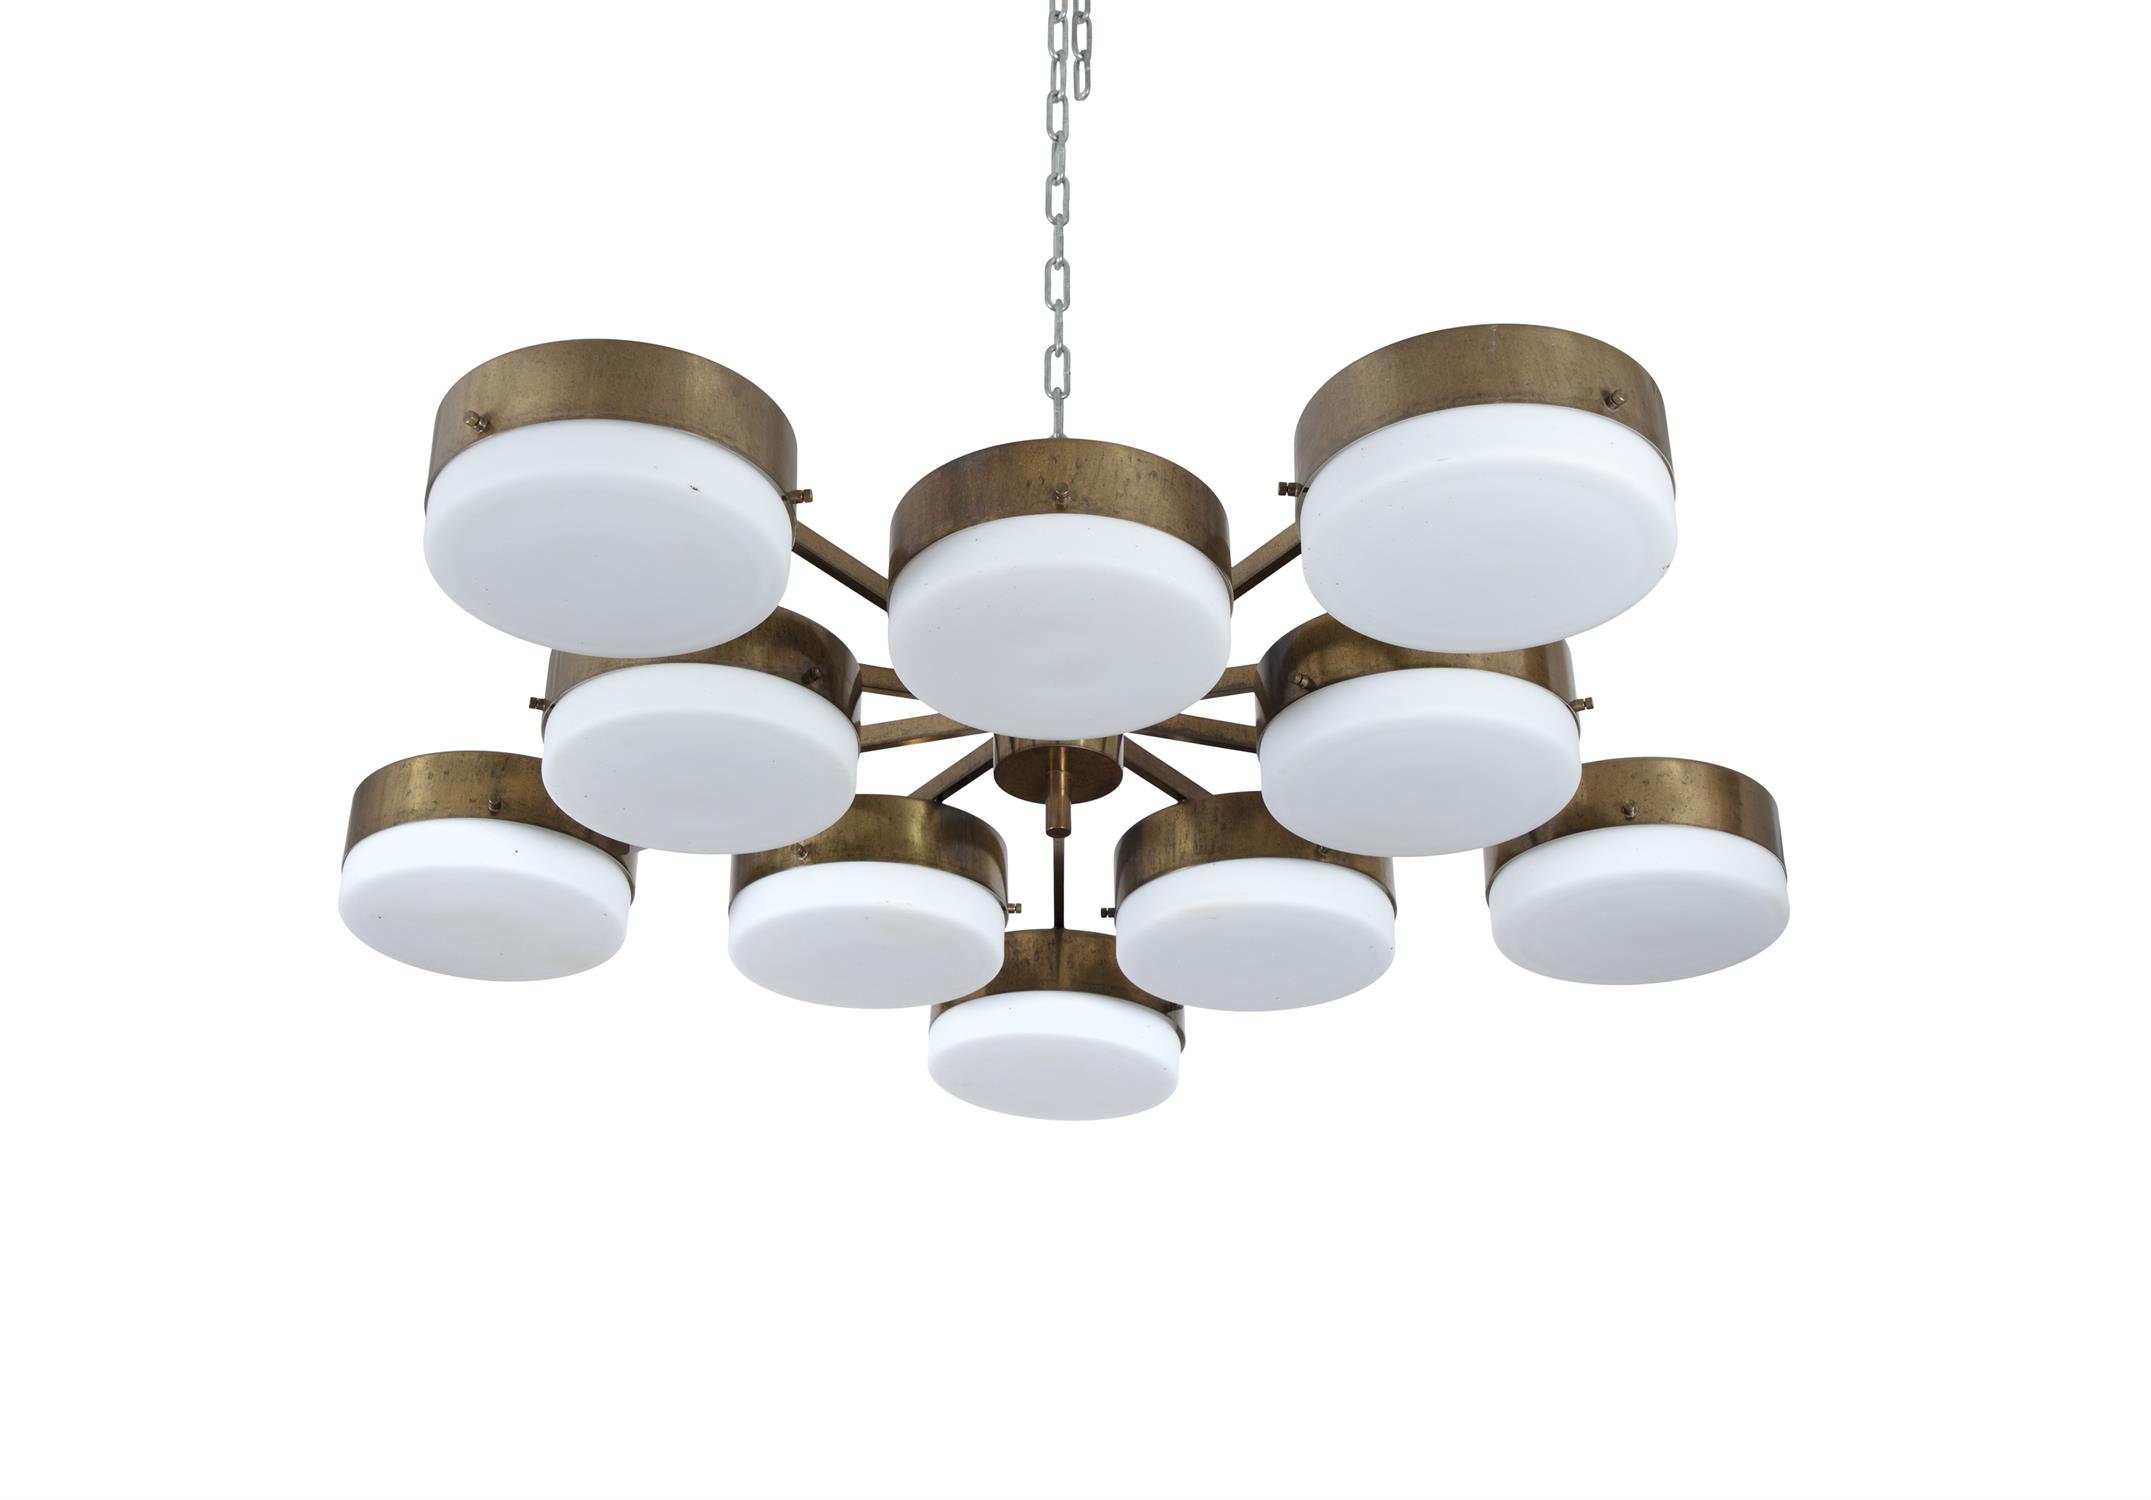 ARREDOLUCE A polished brass ceiling light designed by Angelo Lelli by Arredoluce, - Image 3 of 4